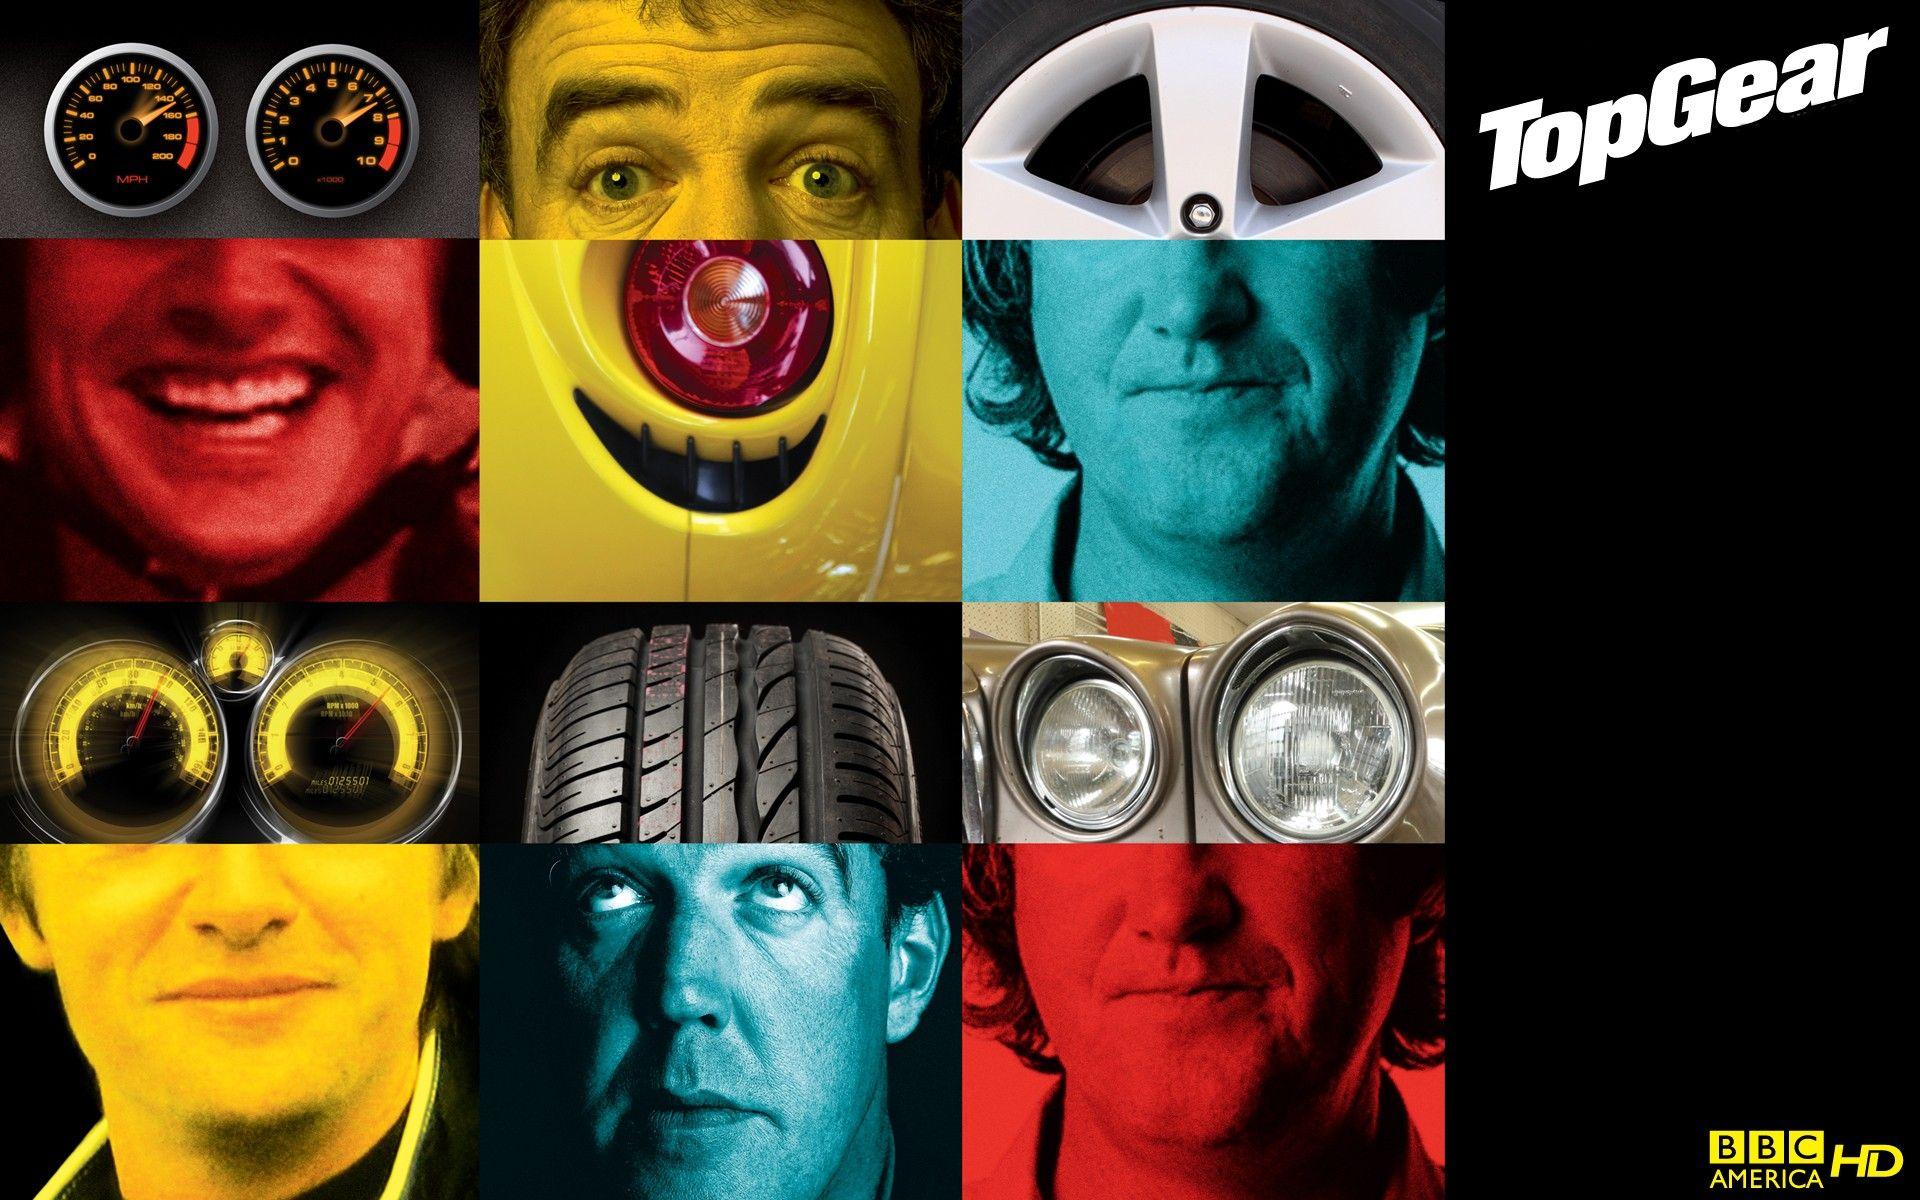 Download the Top Gear Pop Art Wallpaper, Top Gear Pop Art iPhone